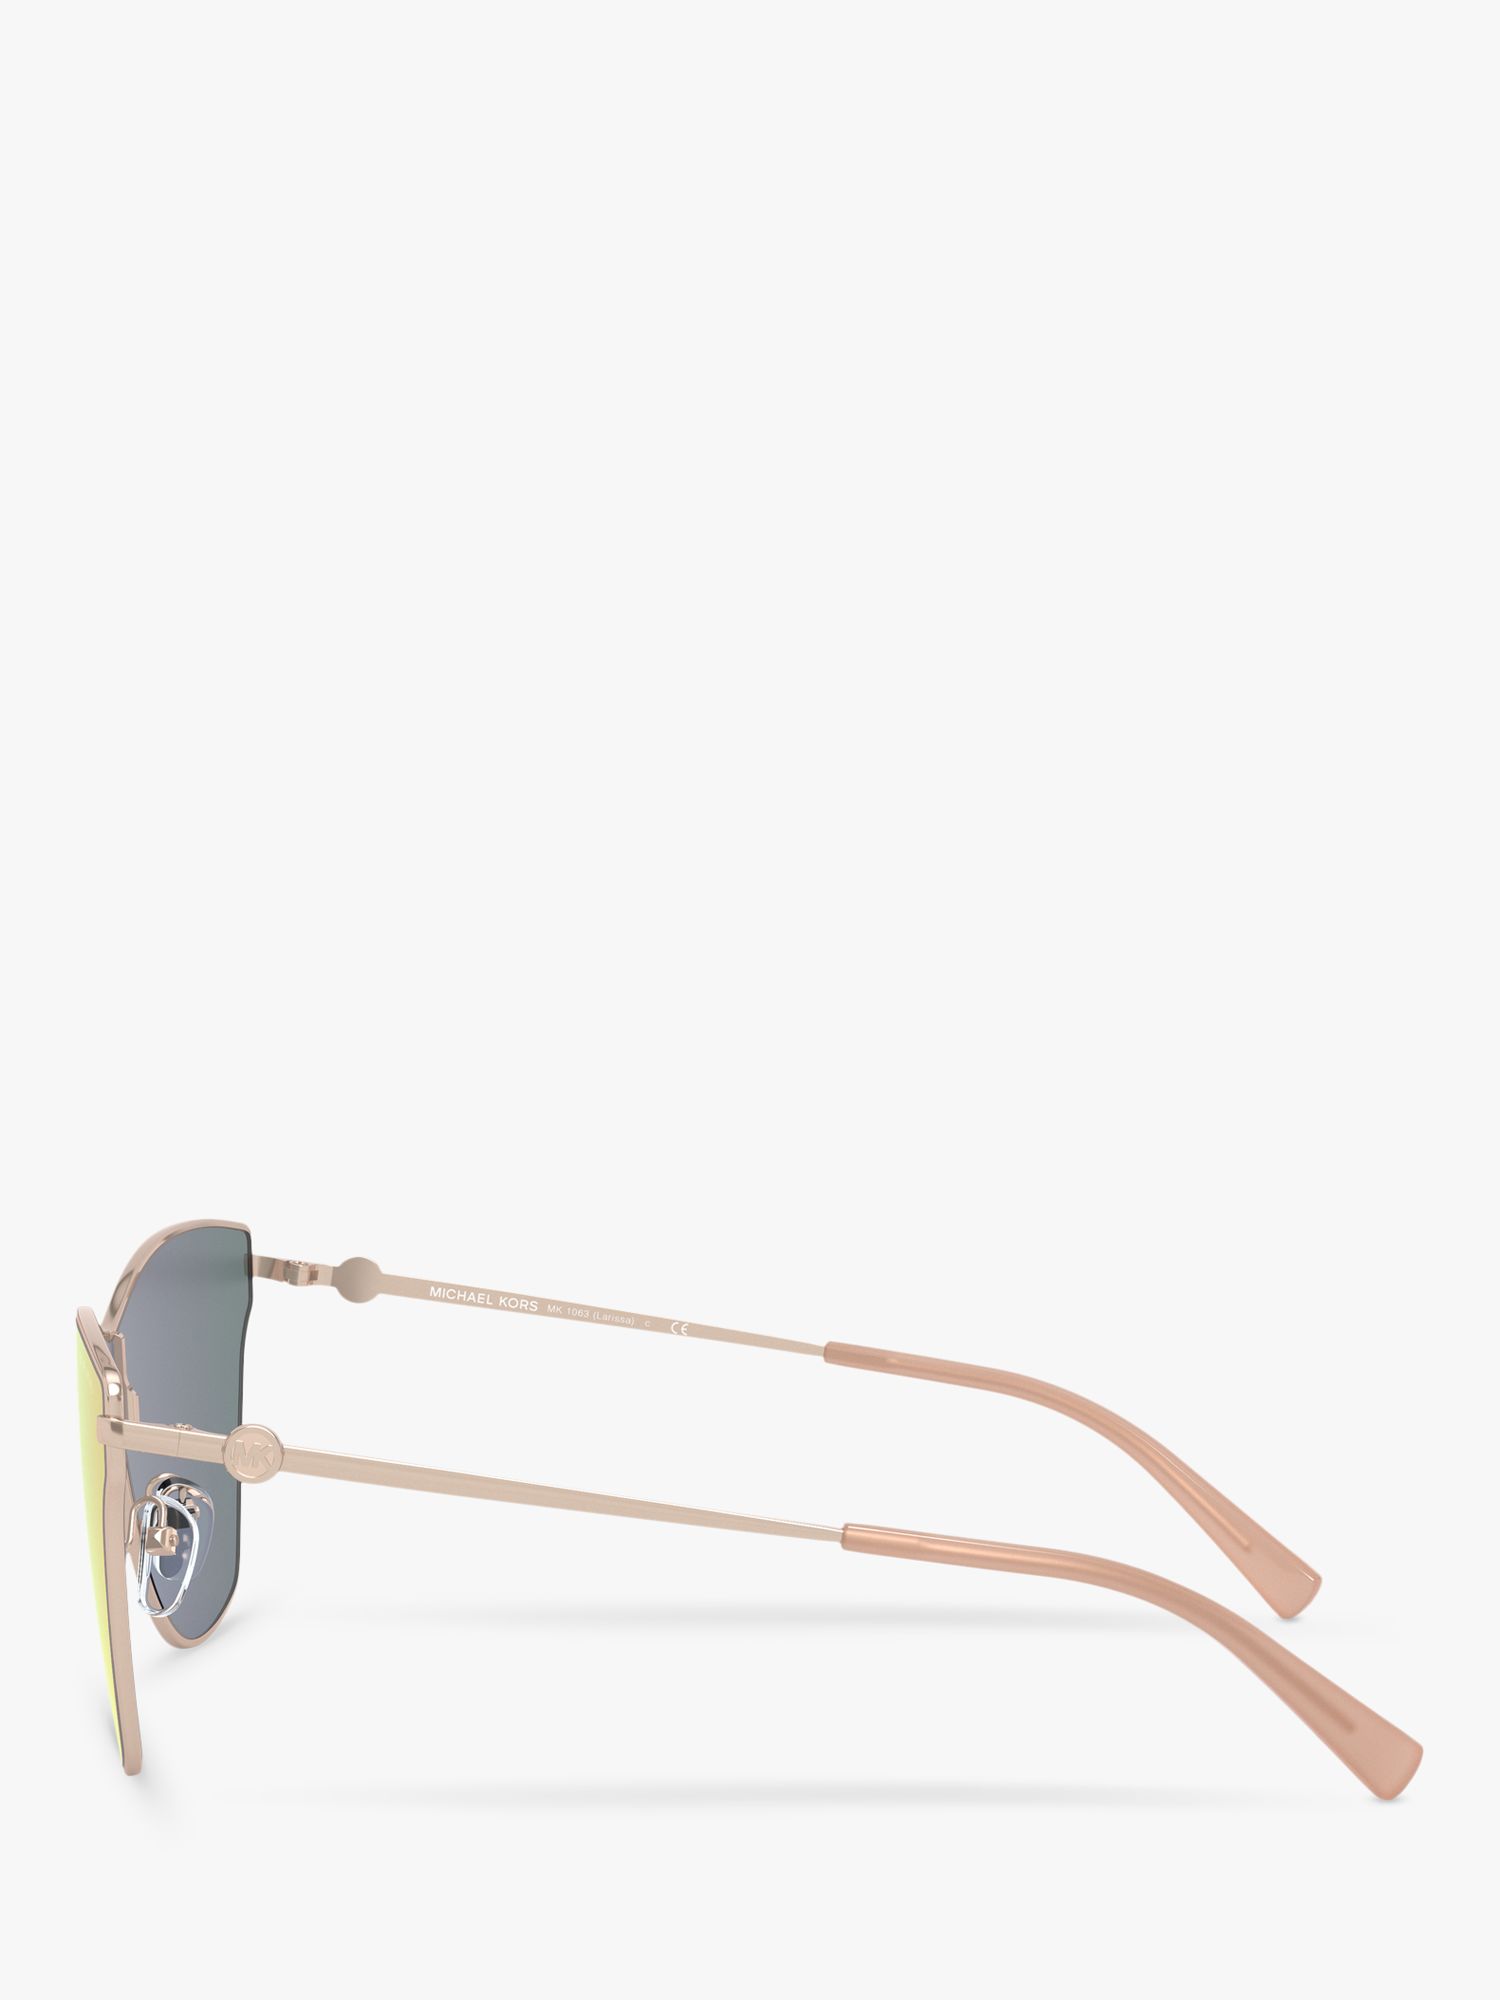 Michael Kors MK1063 Women's Butterfly Sunglasses, Rose Gold/Mirror Purple